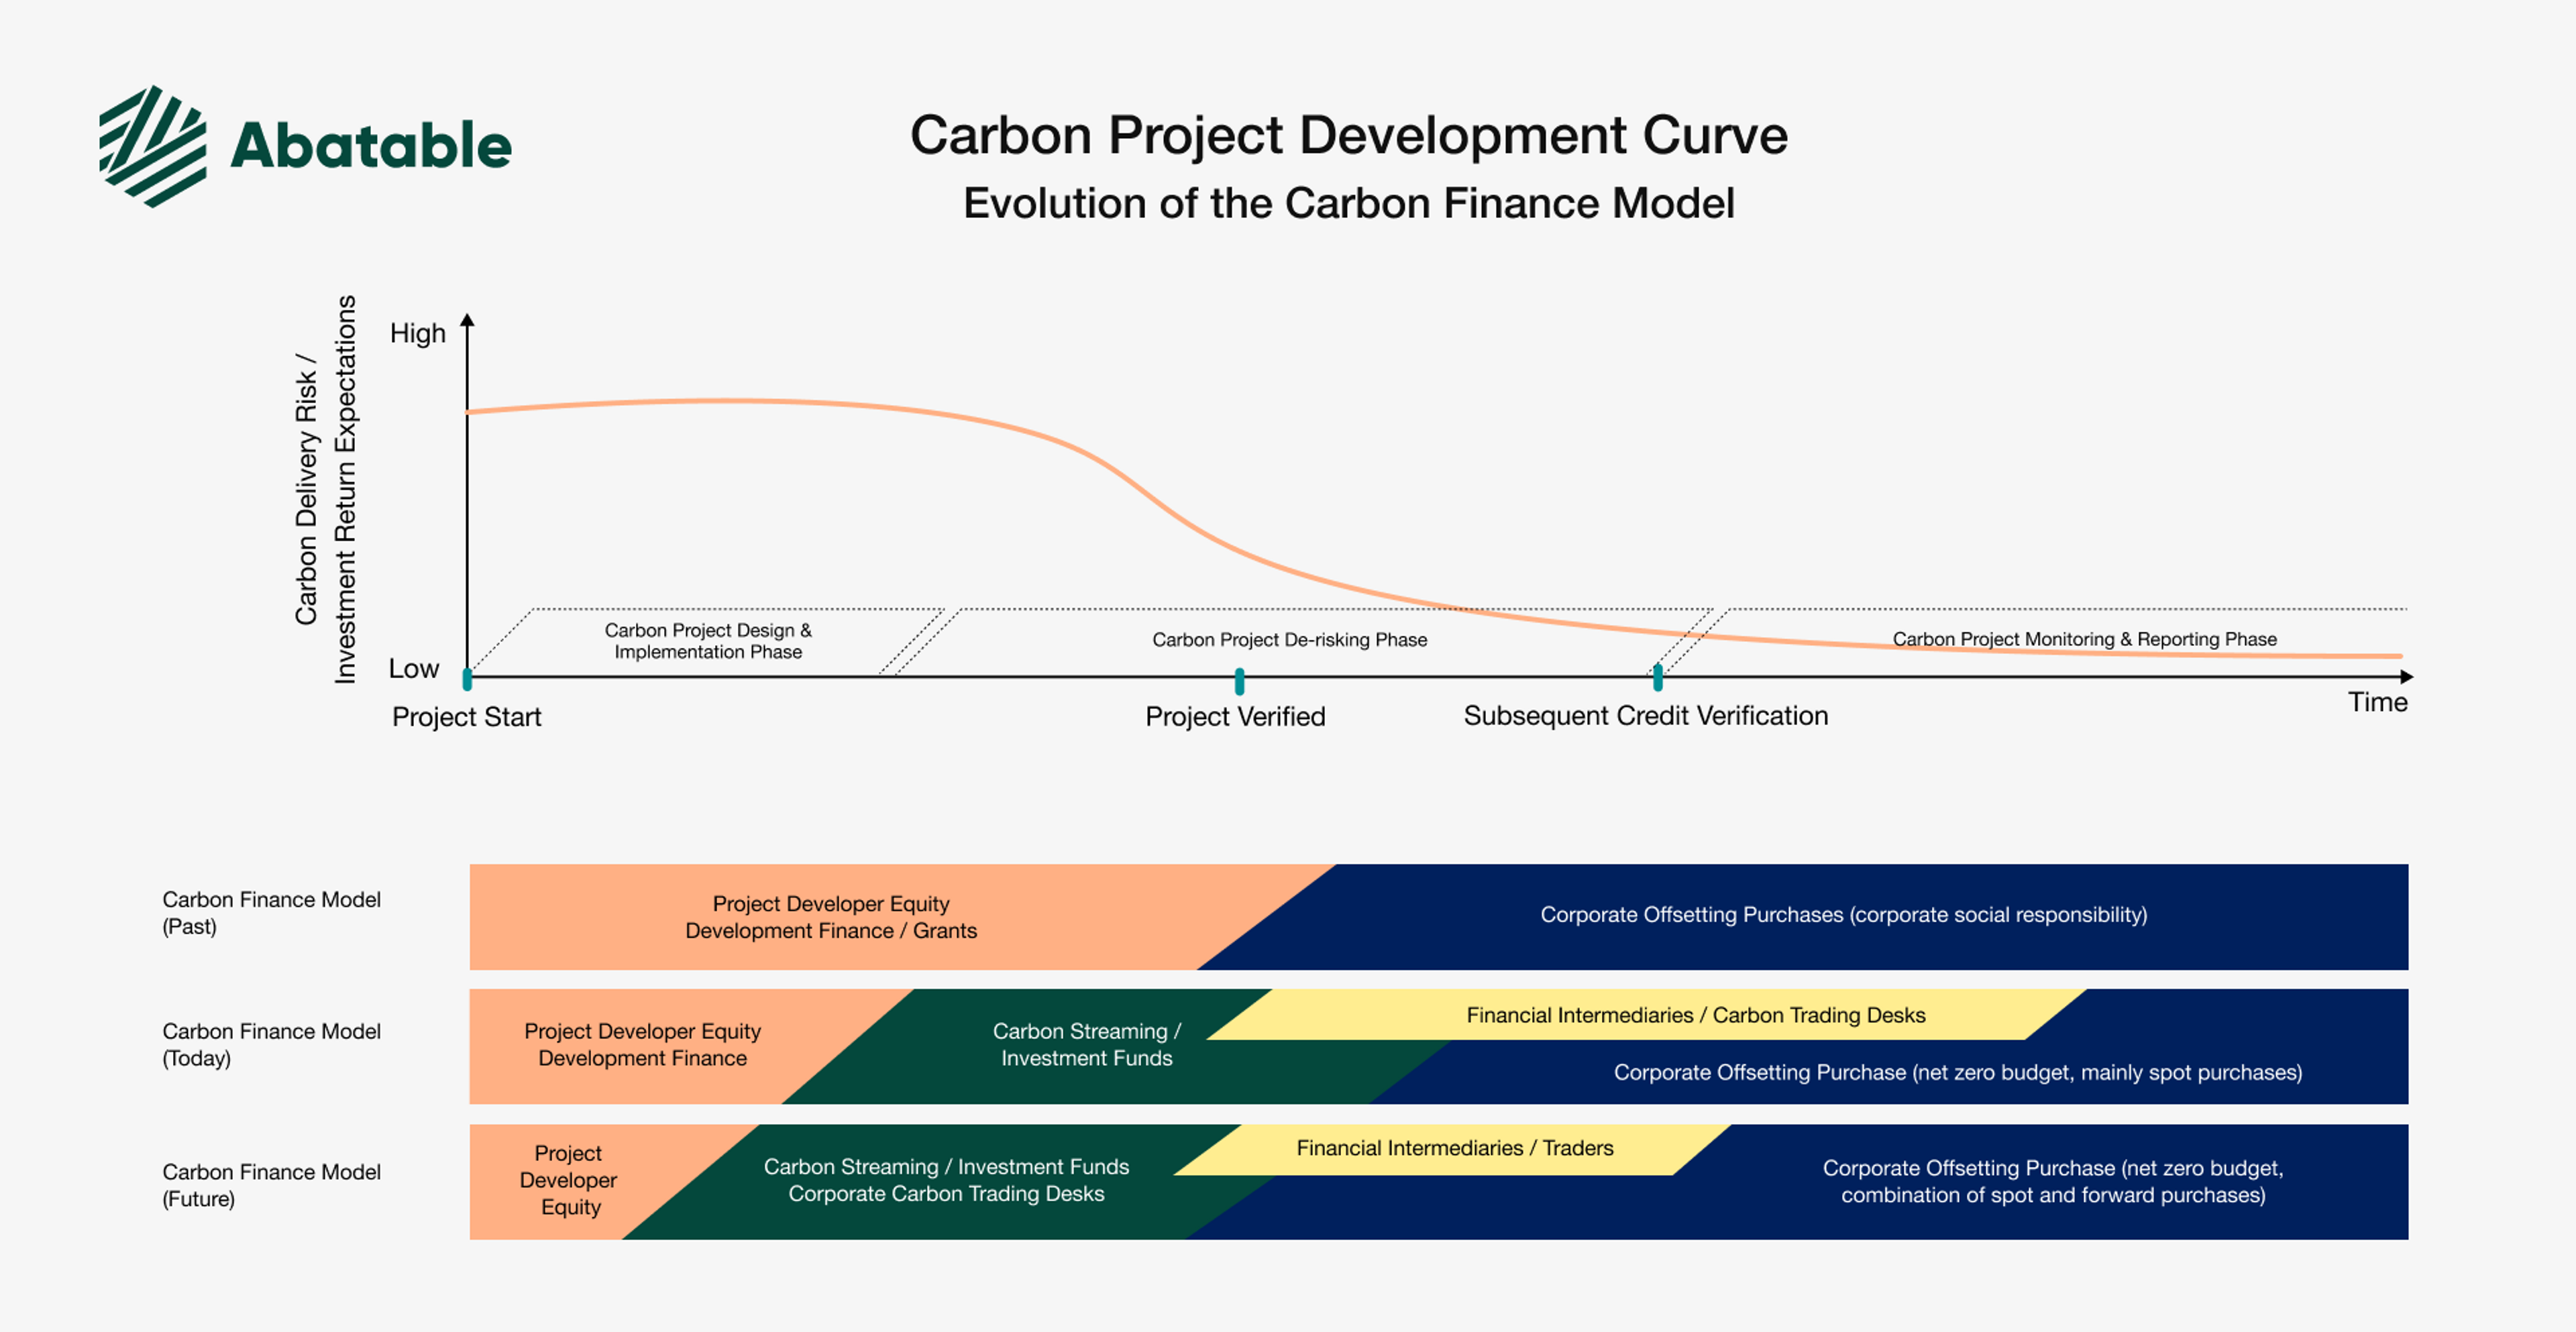 Carbon Project Development Curve Evolution of the Carbon Finance Model